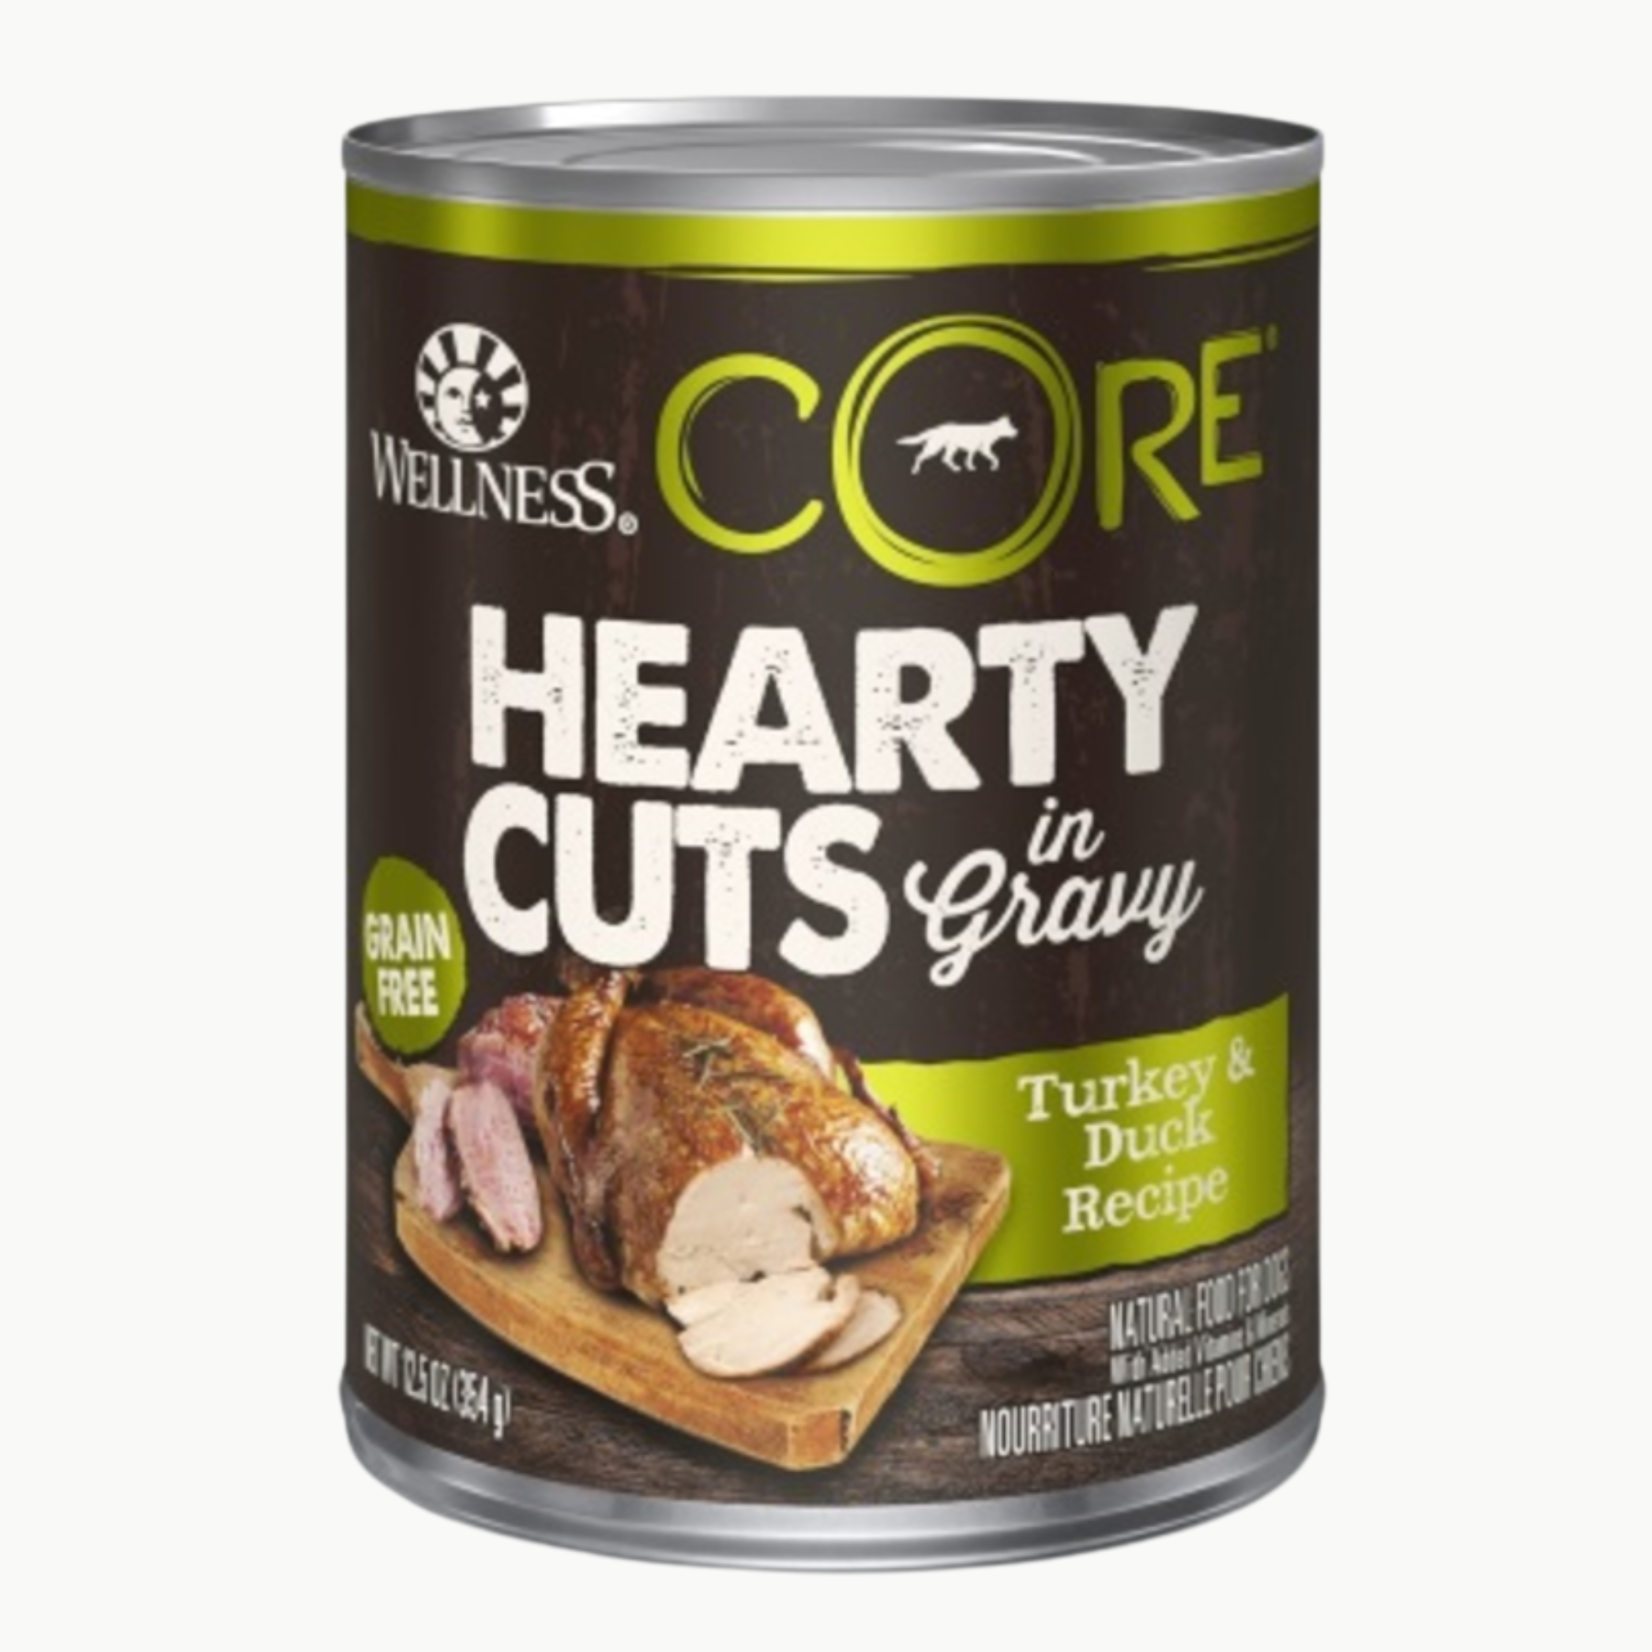 Wellness hearty cuts Turkey & Duck 12.5 oz